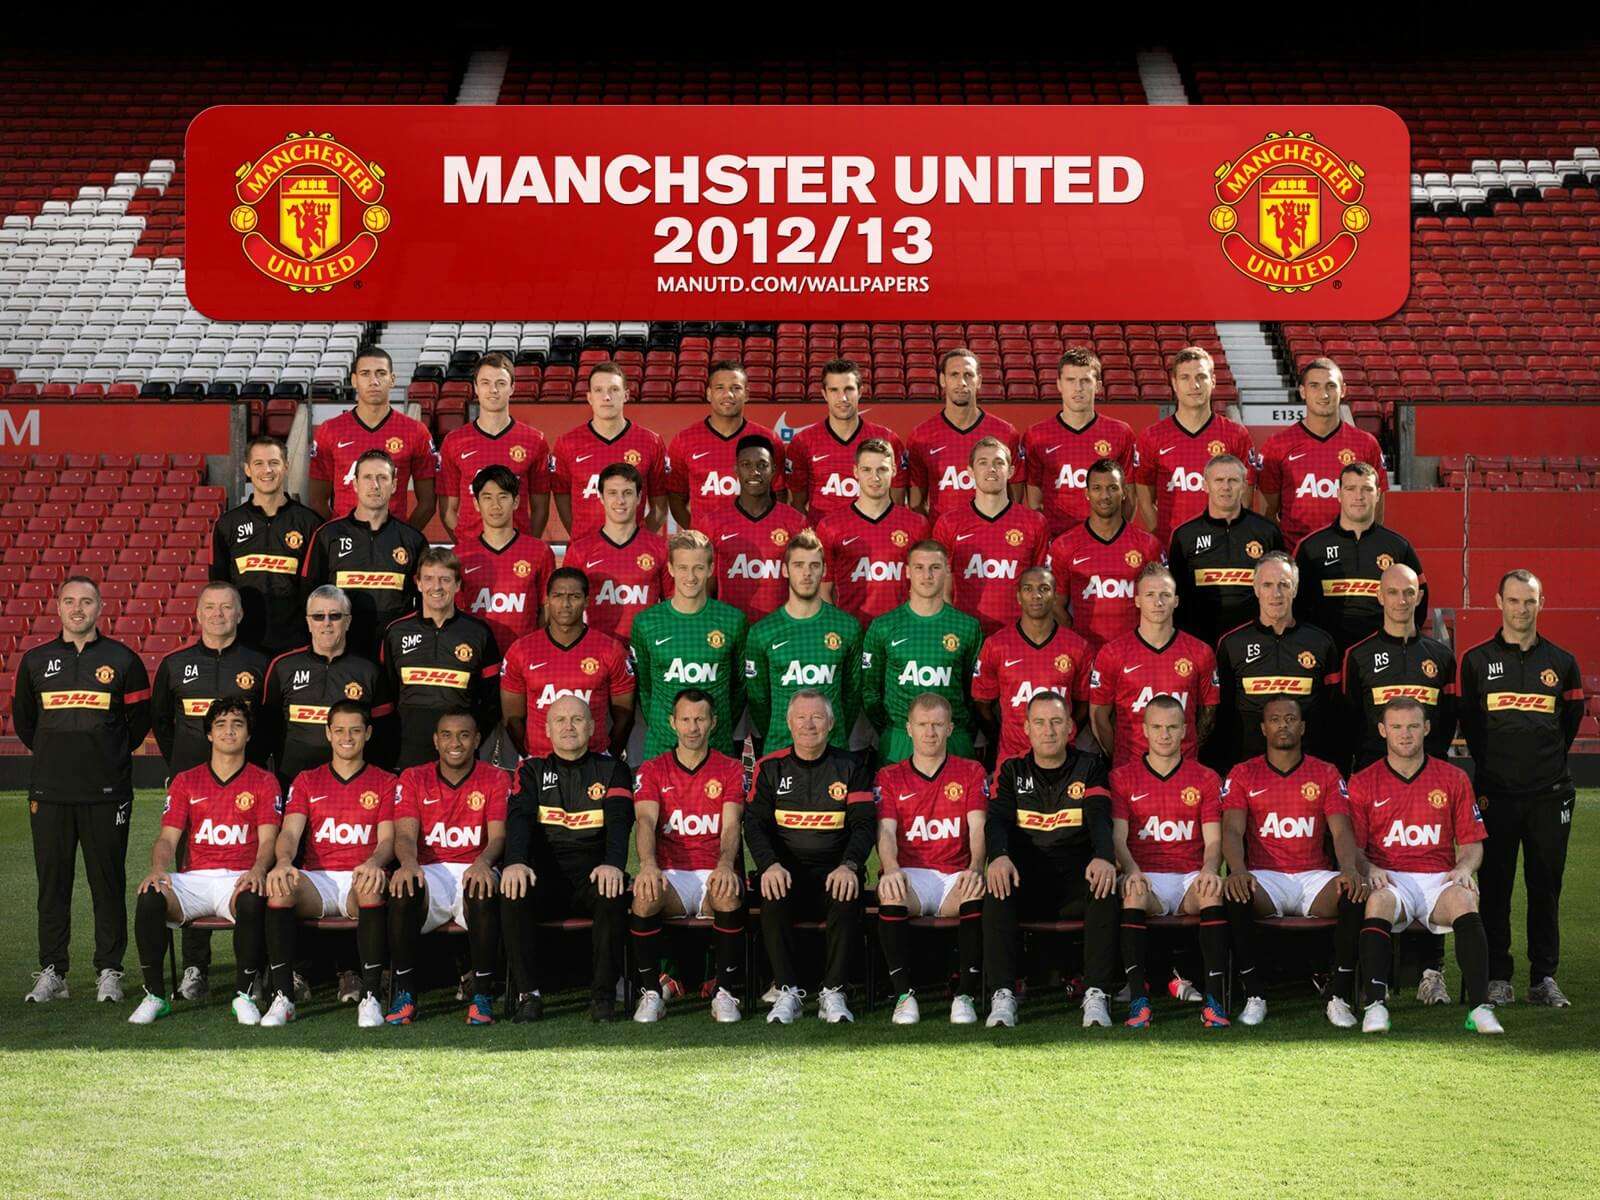 Manchester United Retro Jersey Home 2012/13